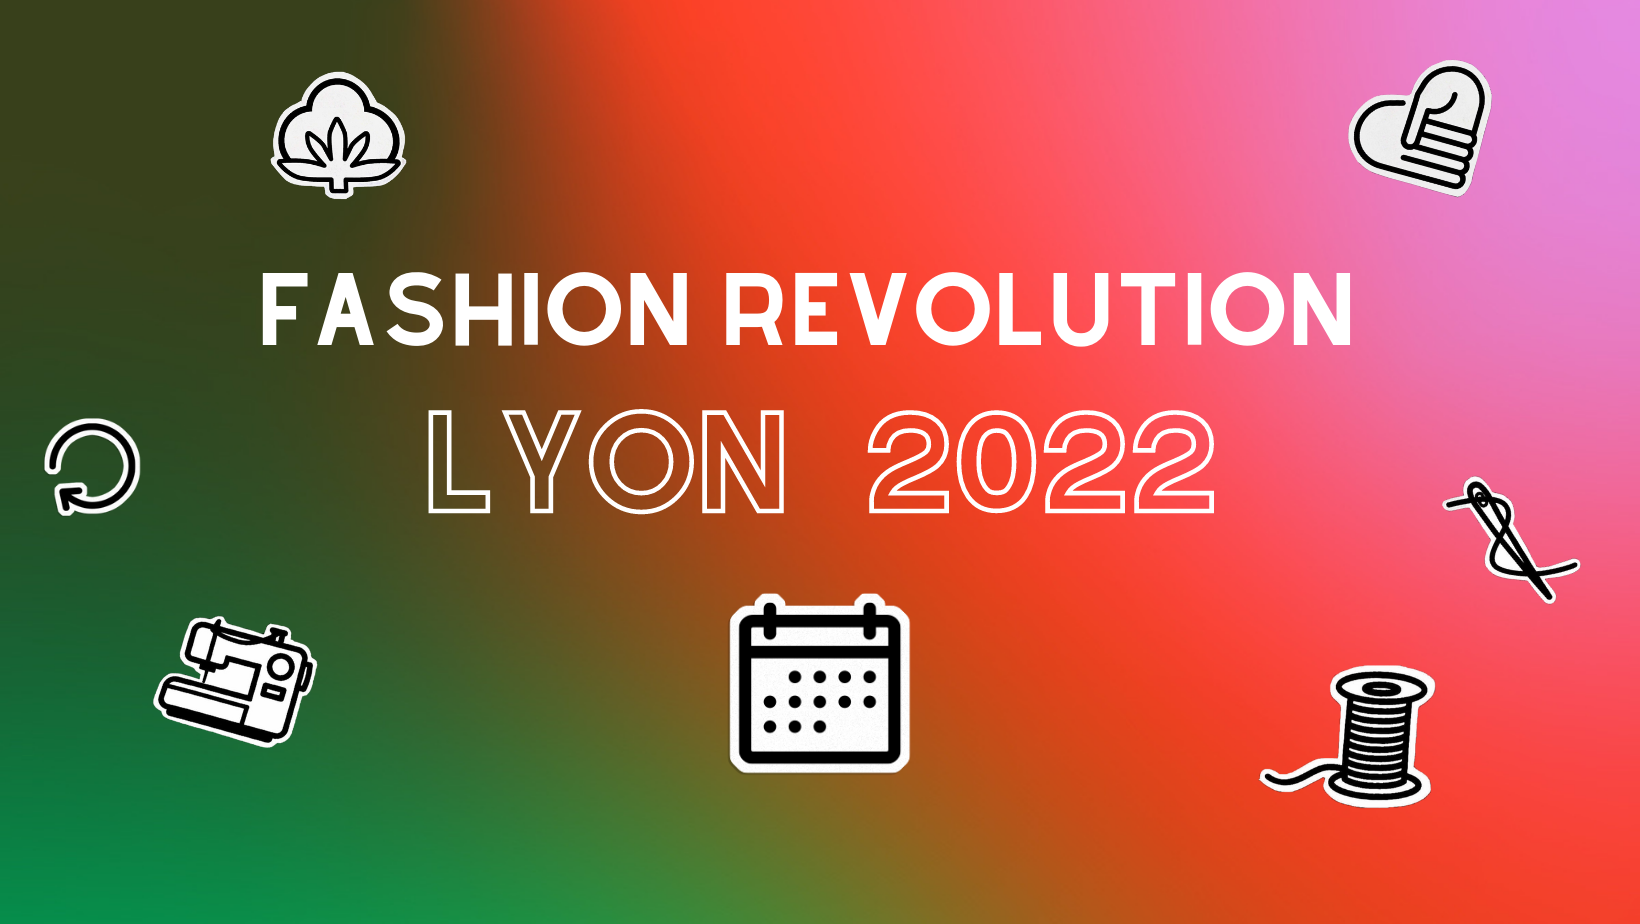 FASHION REVOLUTION LYON 2022